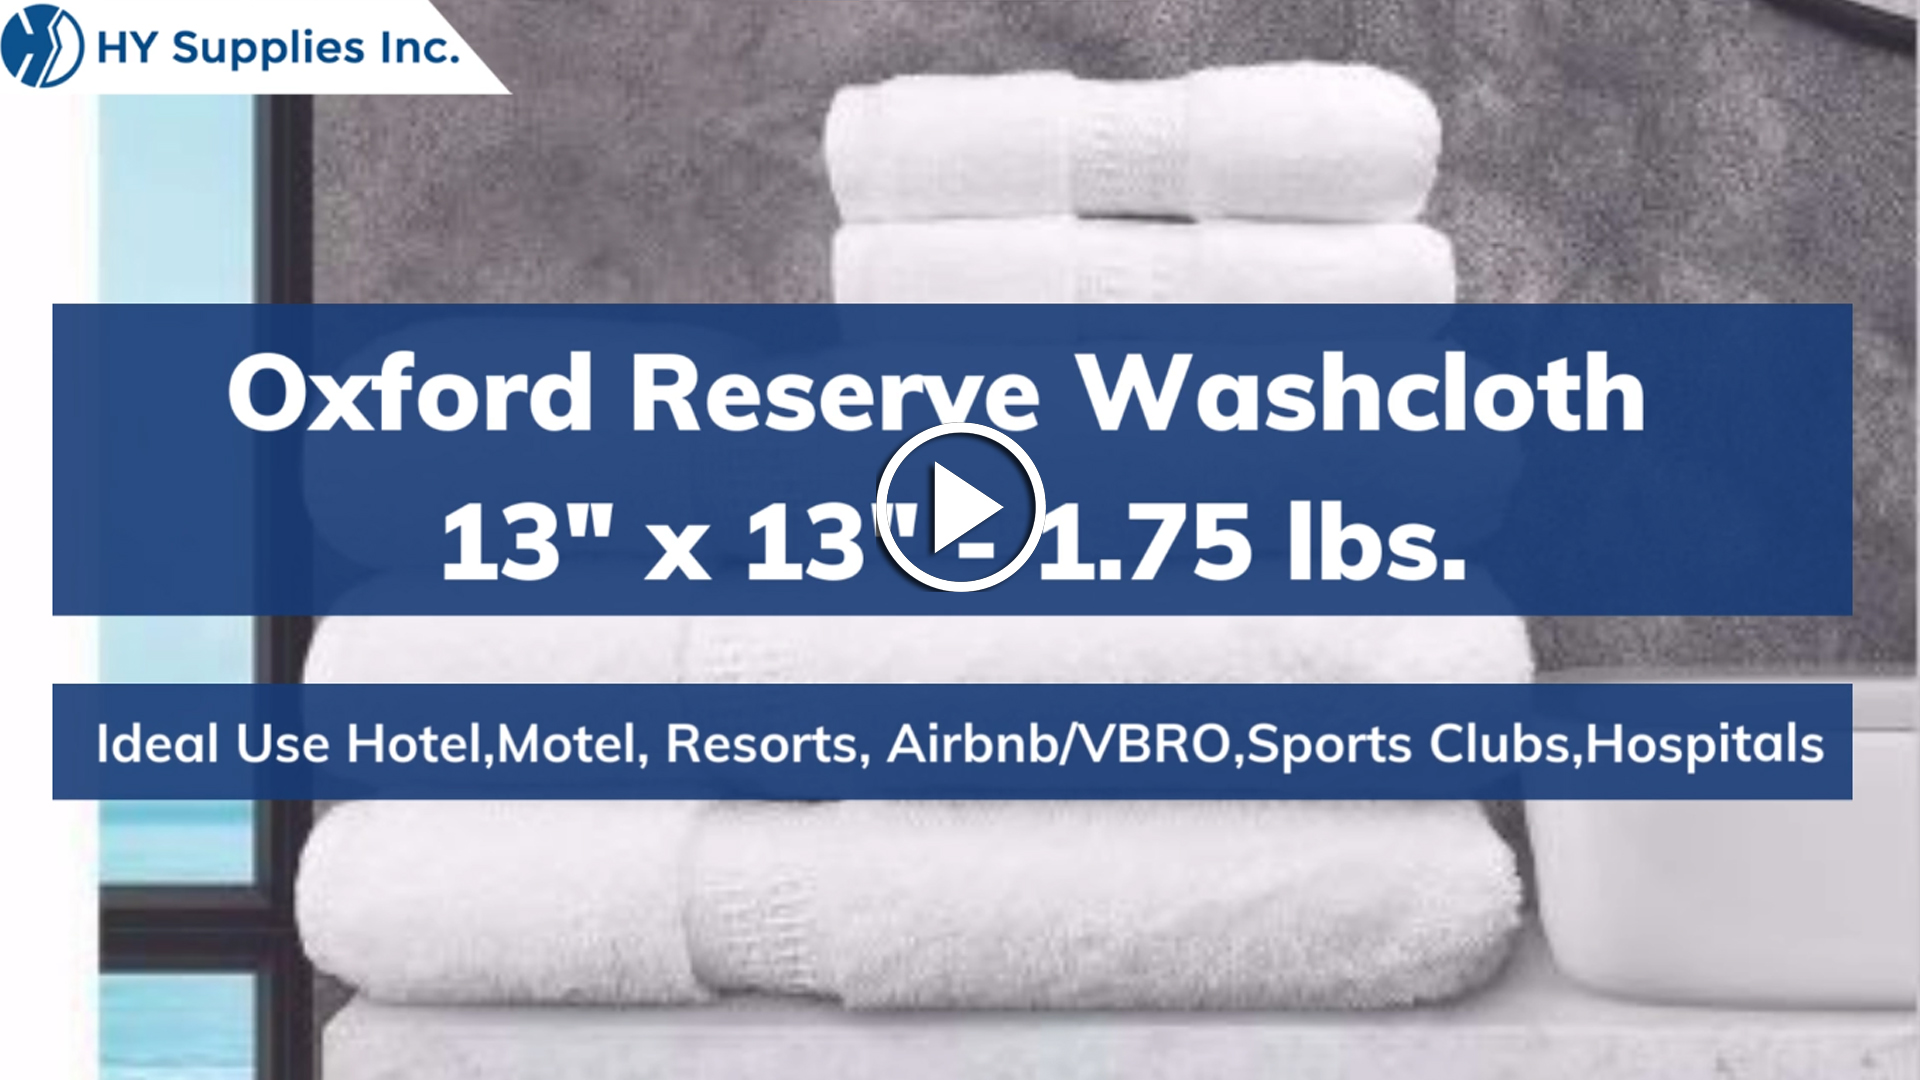 Oxford Reserve Washcloth - 13" x 13" - 1.75 lbs.